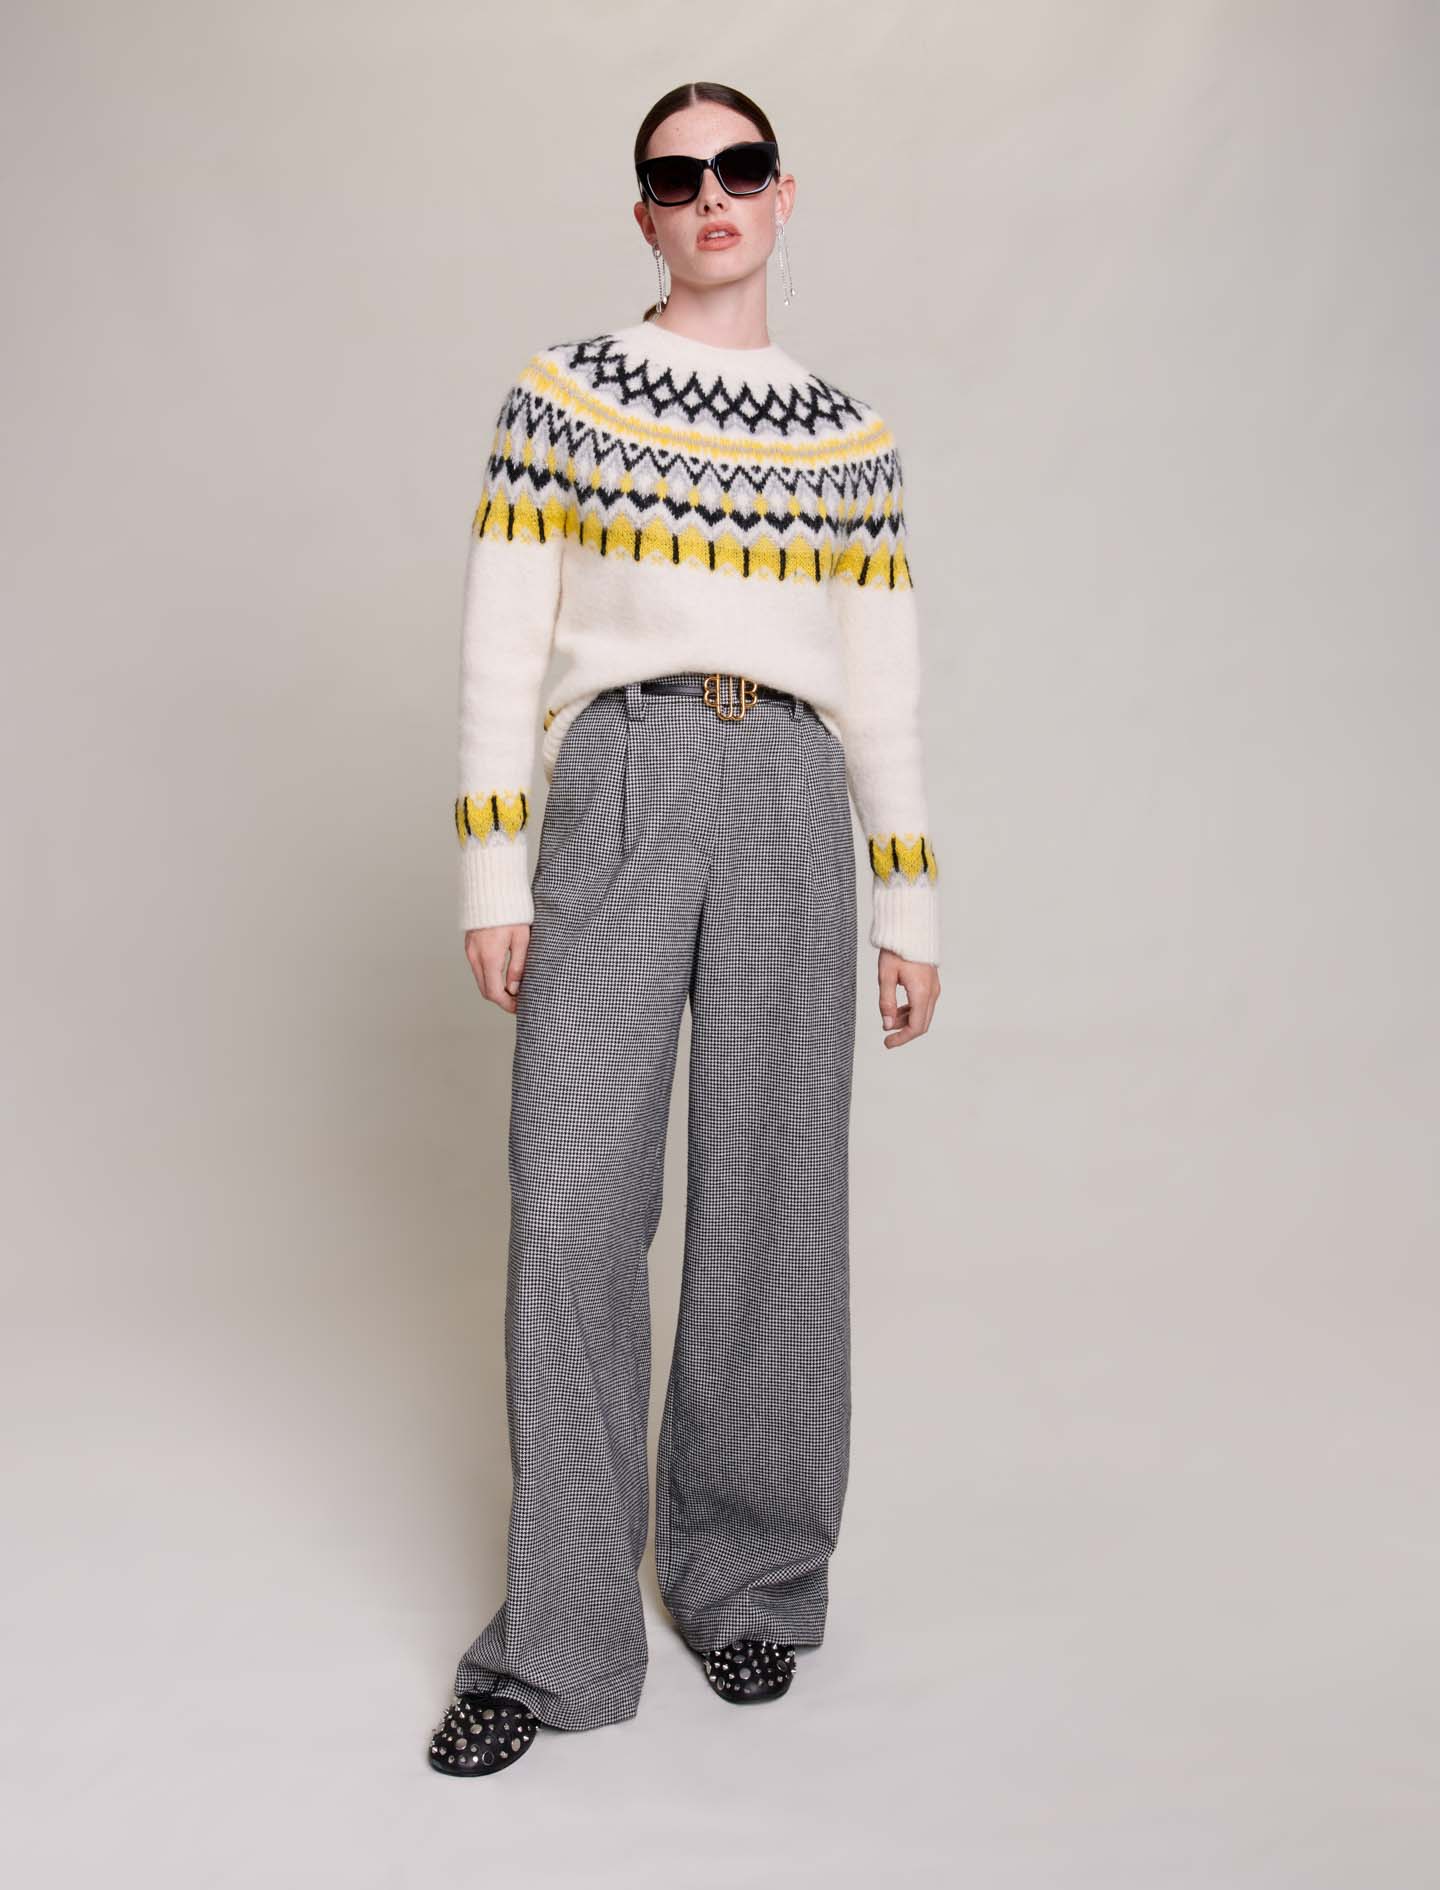 Maje Woman's alpaca, Jacquard wool jumper for Fall/Winter, in color Ecru / Yellow /